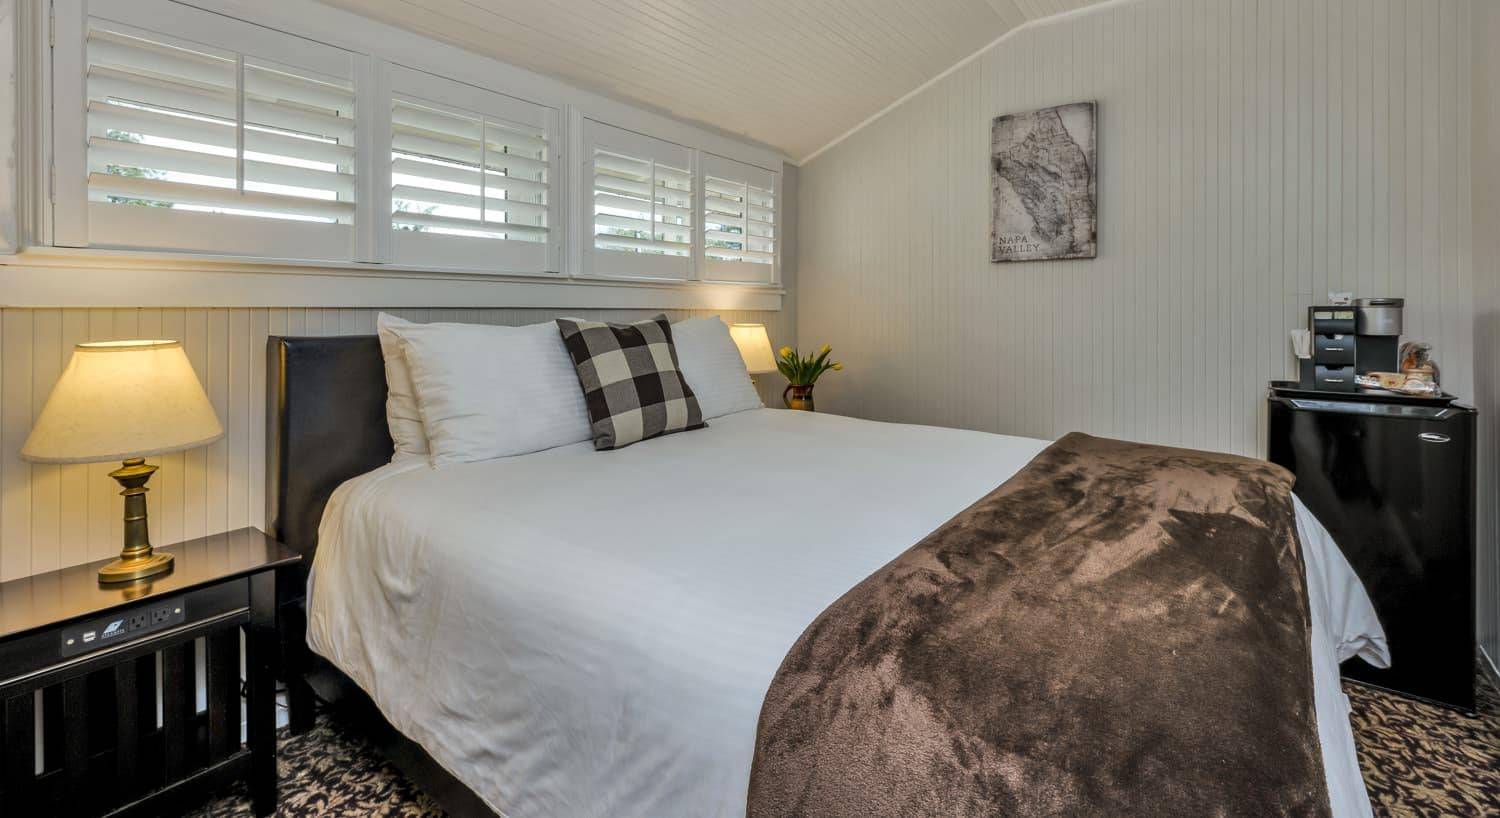 Bedroom with white walls, white trim, floral carpeting, white bedding, and black mini fridge